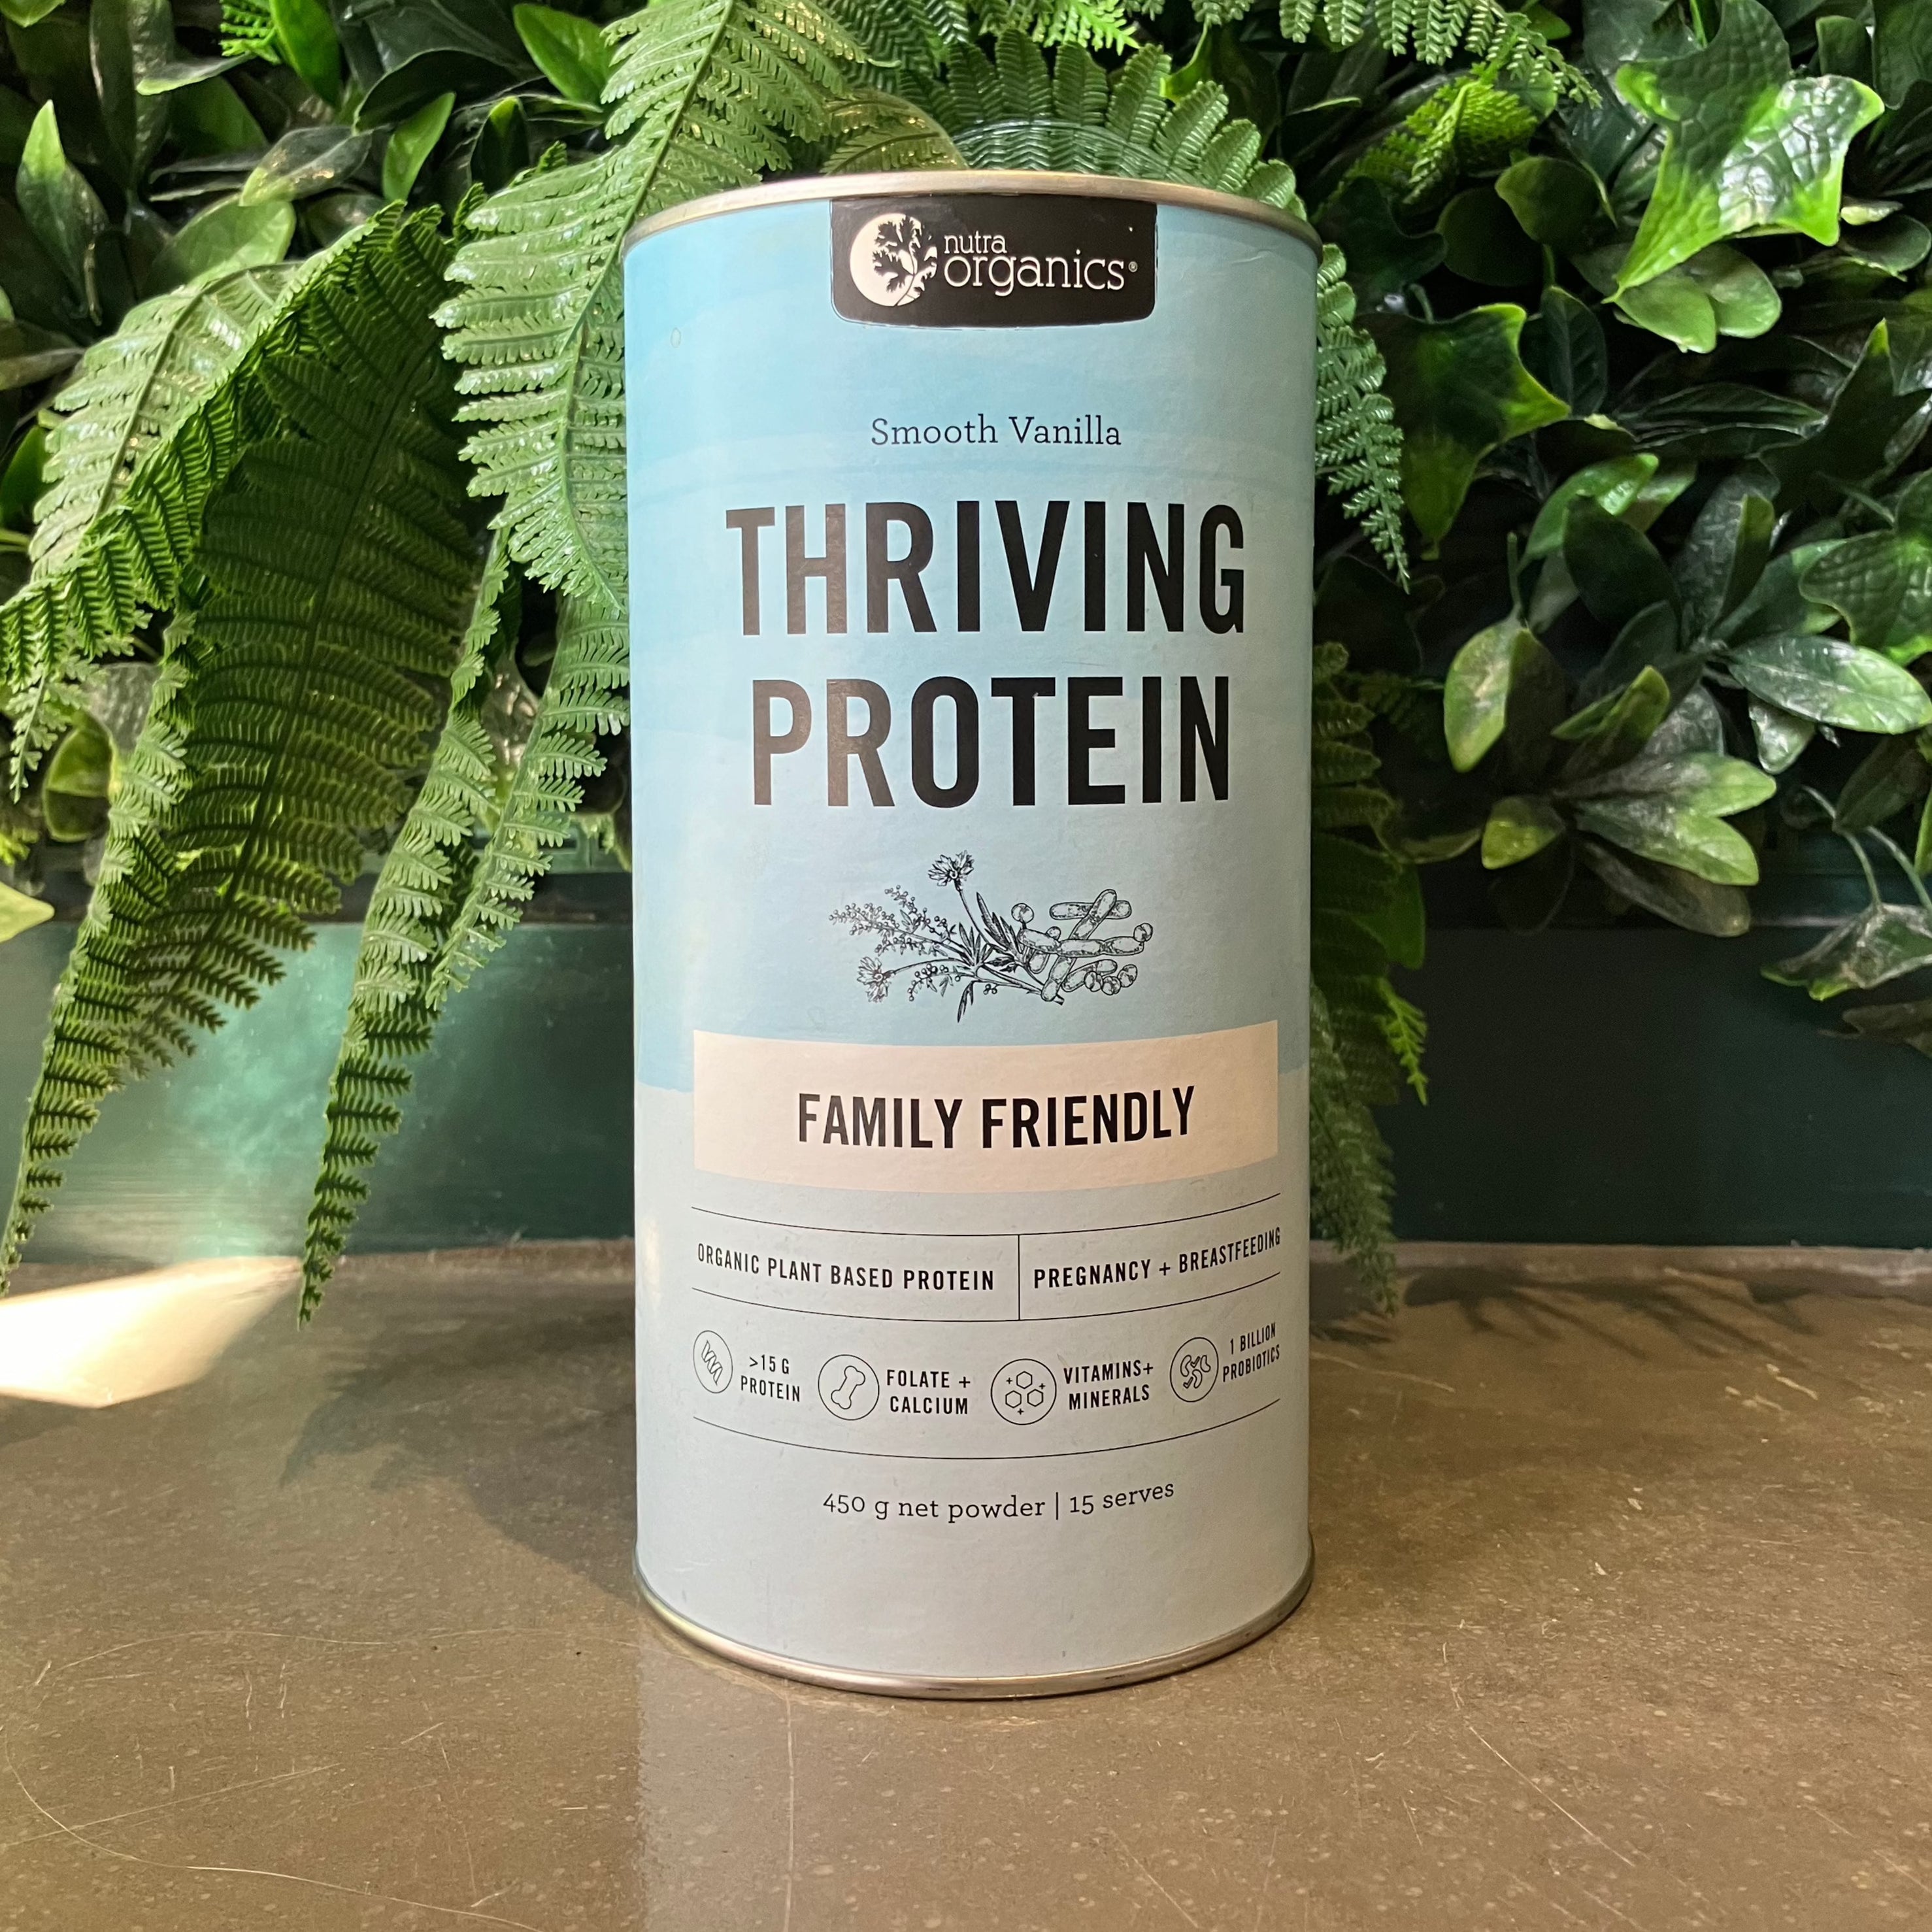 Thriving Family, Nutra Organics – Protein & Multivitamin - 15 Servings